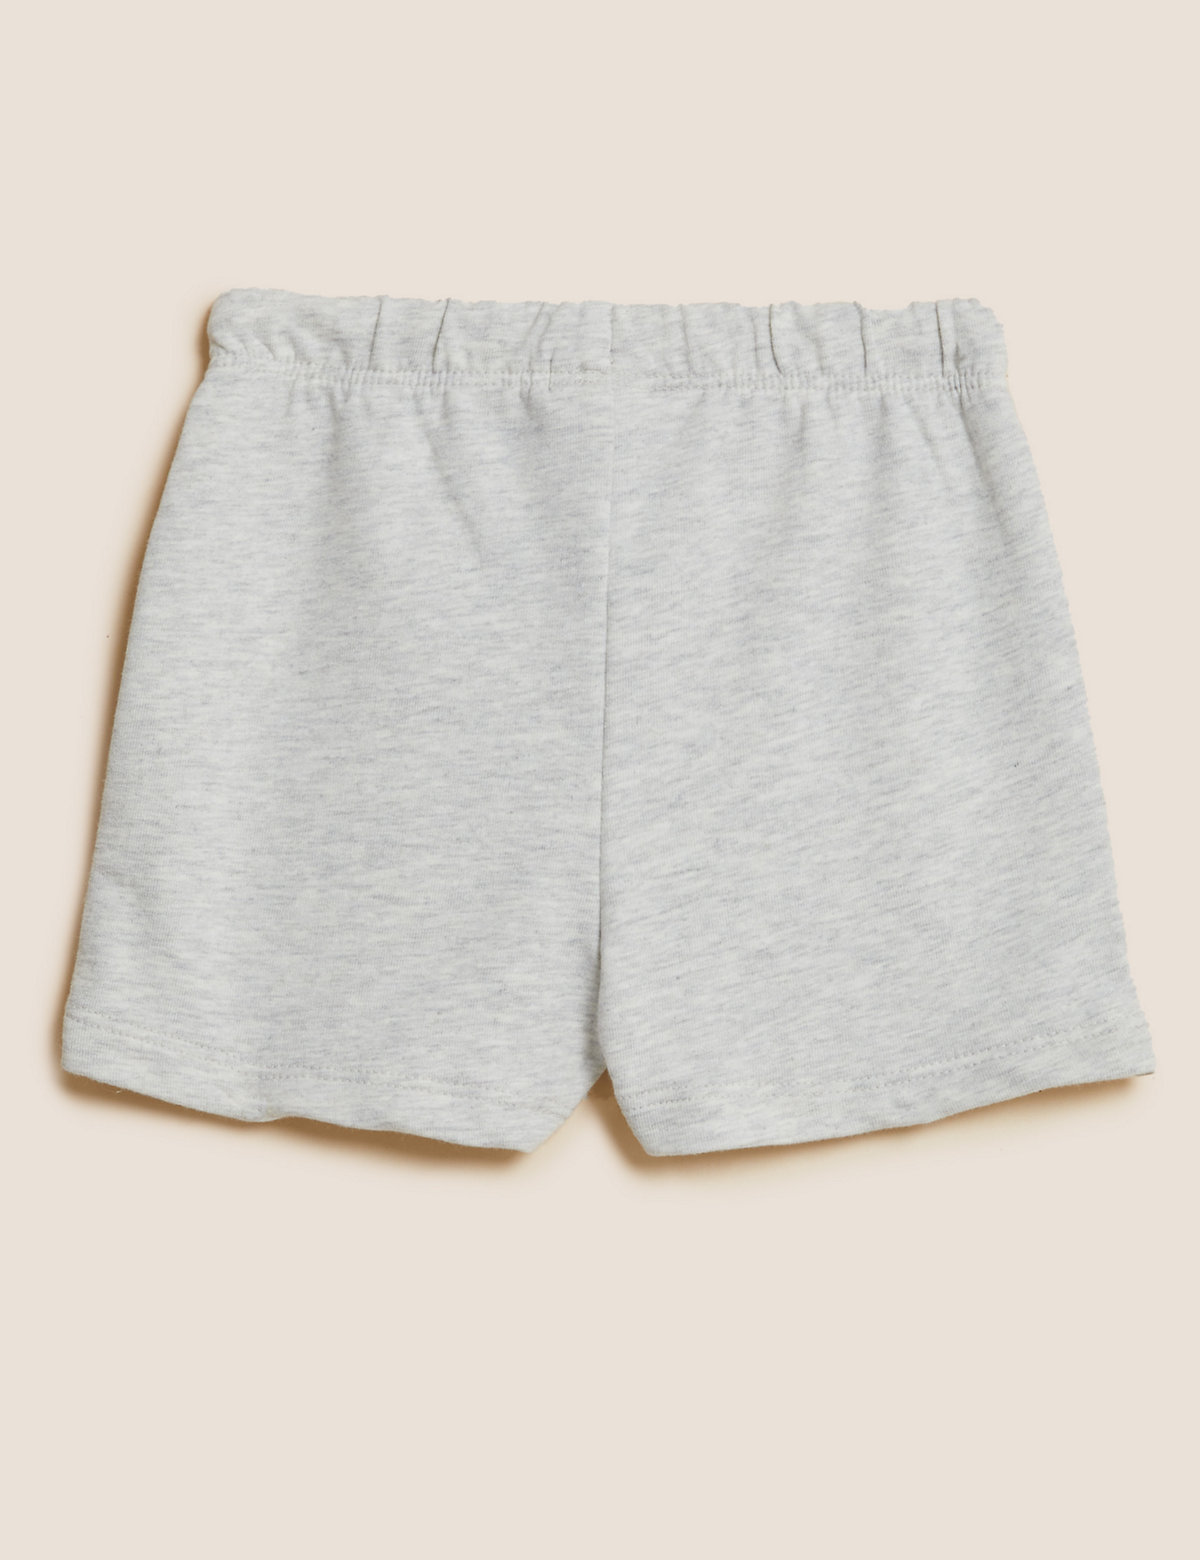 3pk Cotton Rich Patterned Shorts (0-3 Yrs)